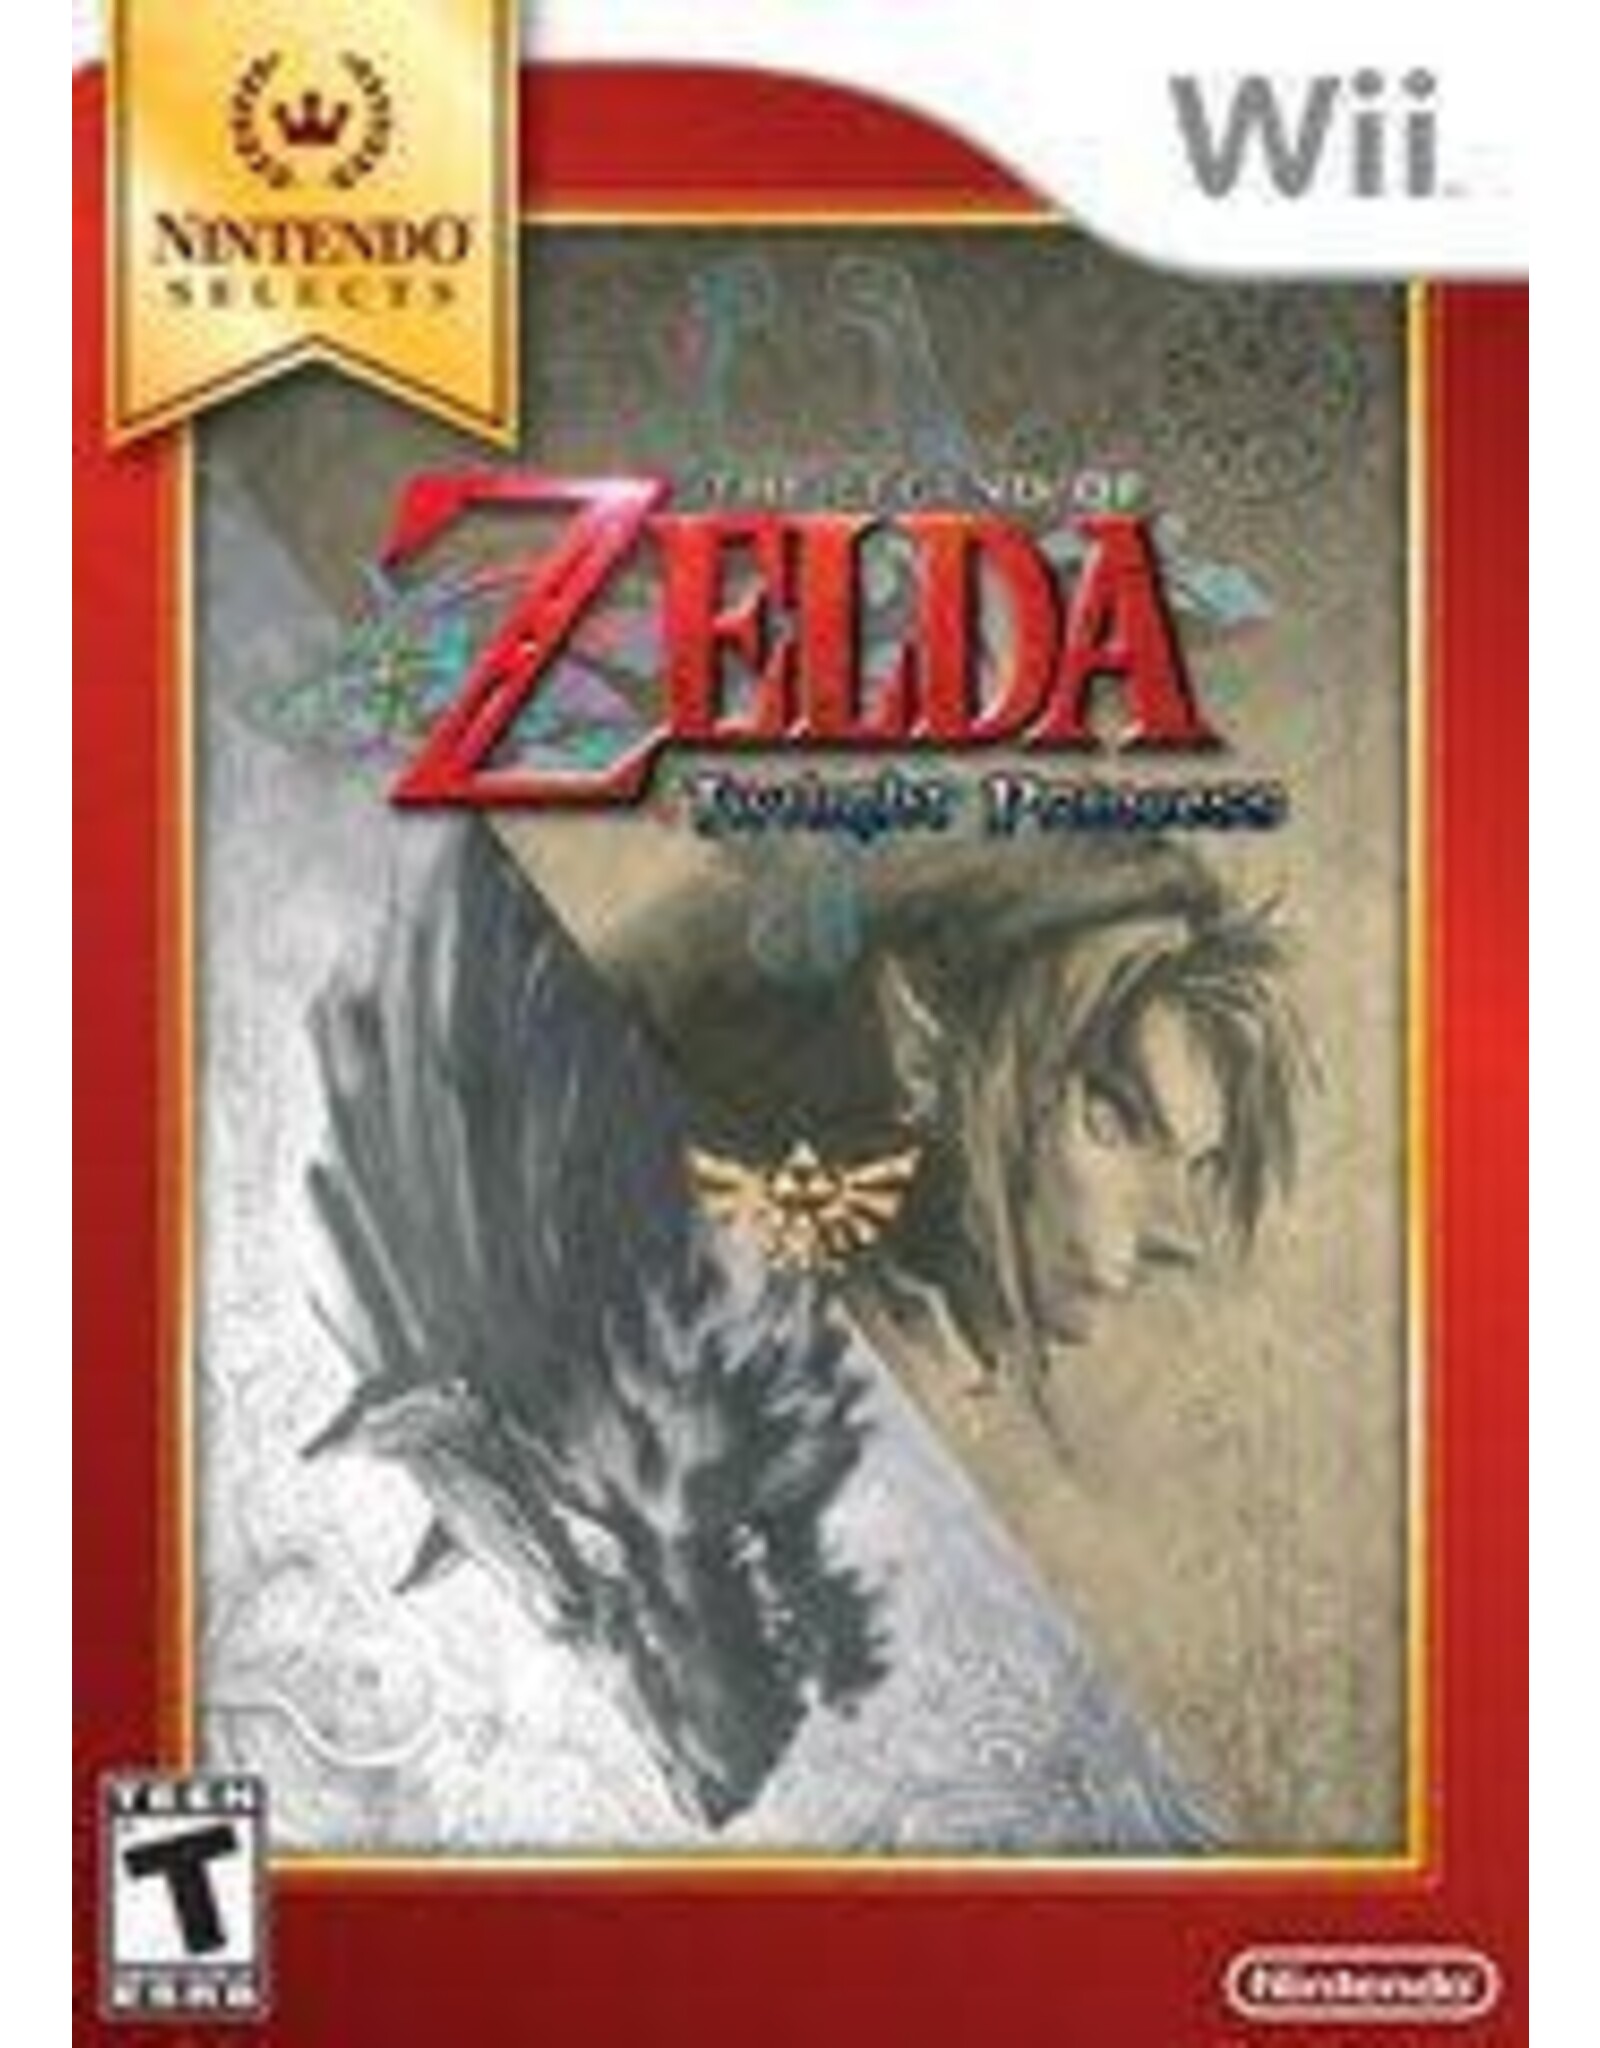 Wii Legend of Zelda Twilight Princess, The (Nintendo Selects, Brand New)